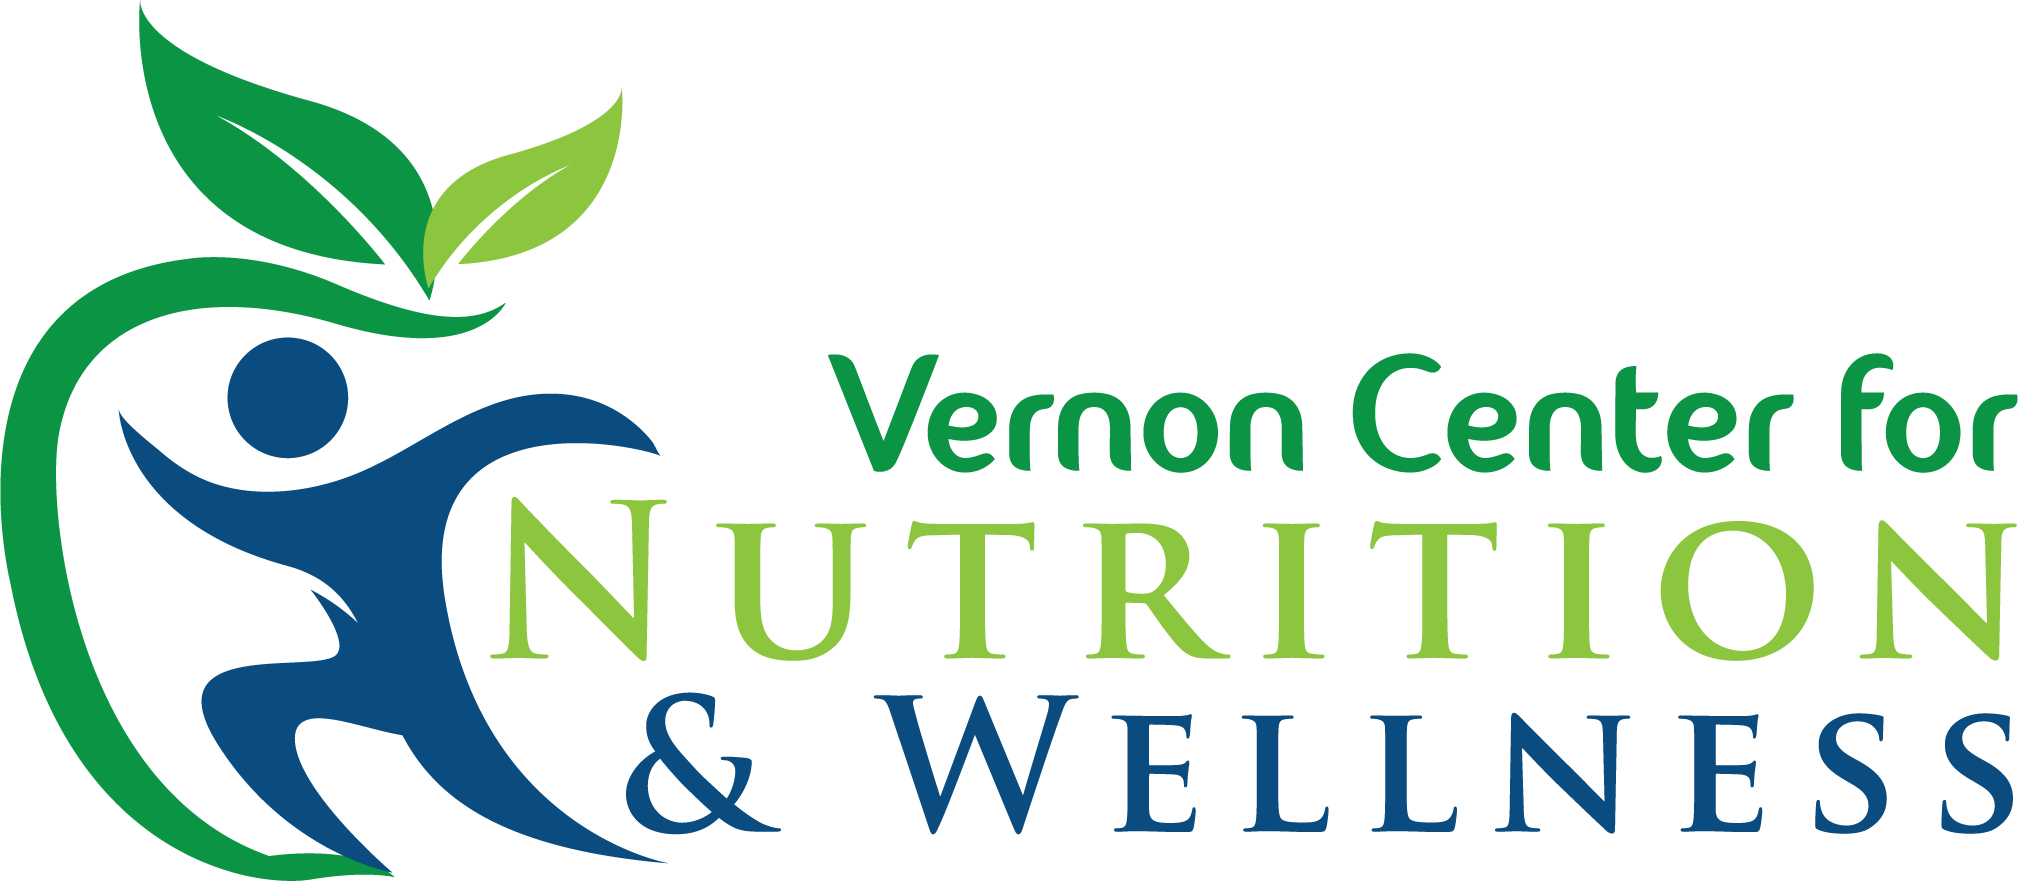 Vernon Center for Nutrition